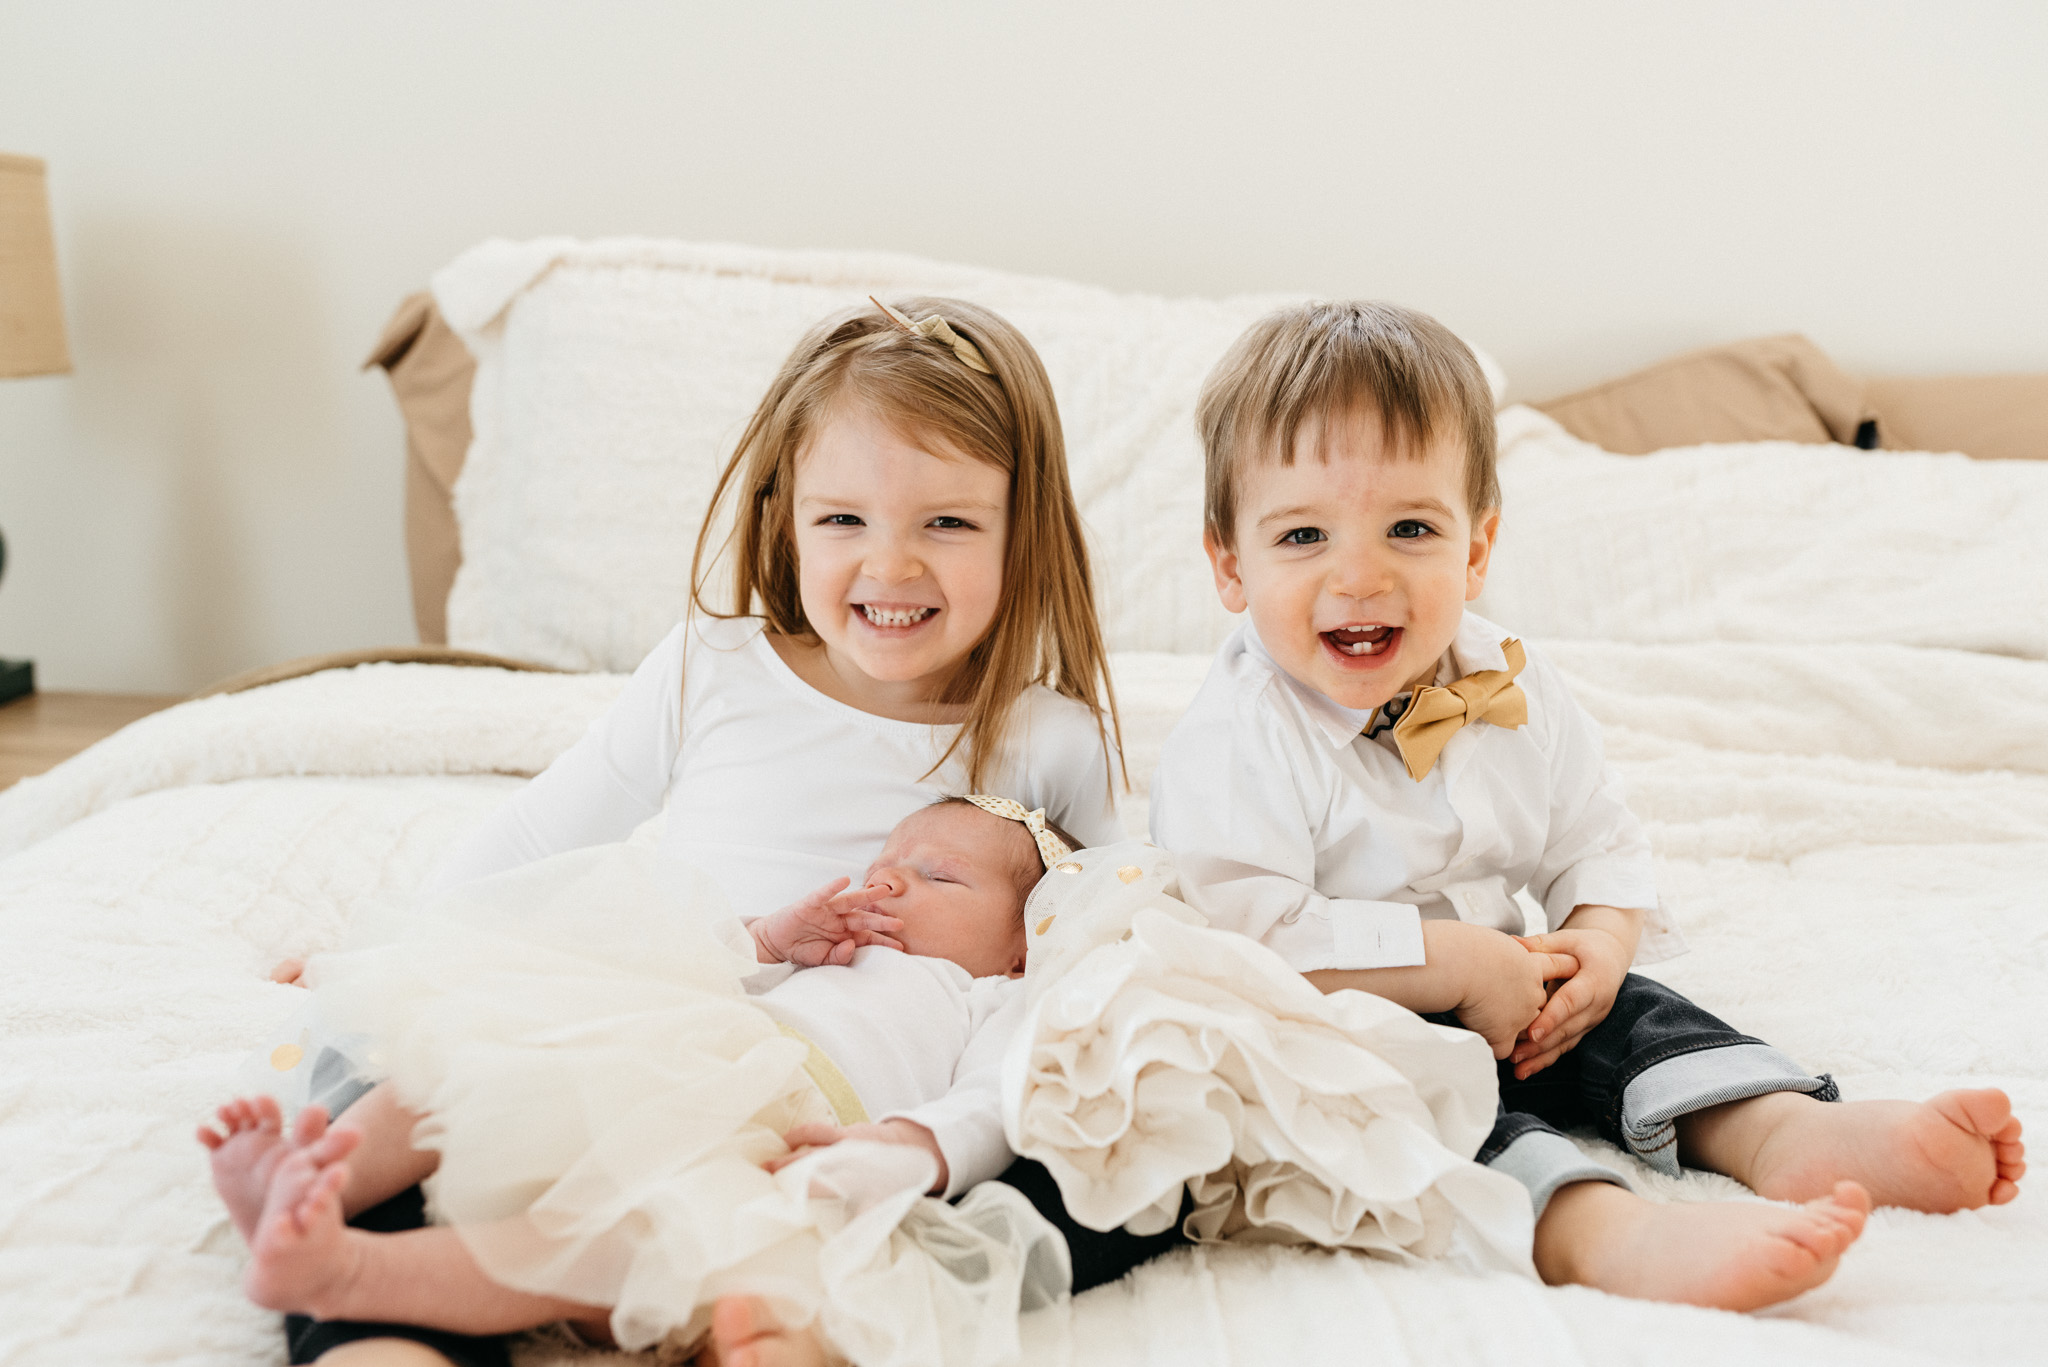 siblings-and-new-baby-sister-Columbus-Ohio-Photographer-Erika-Venci-Photography